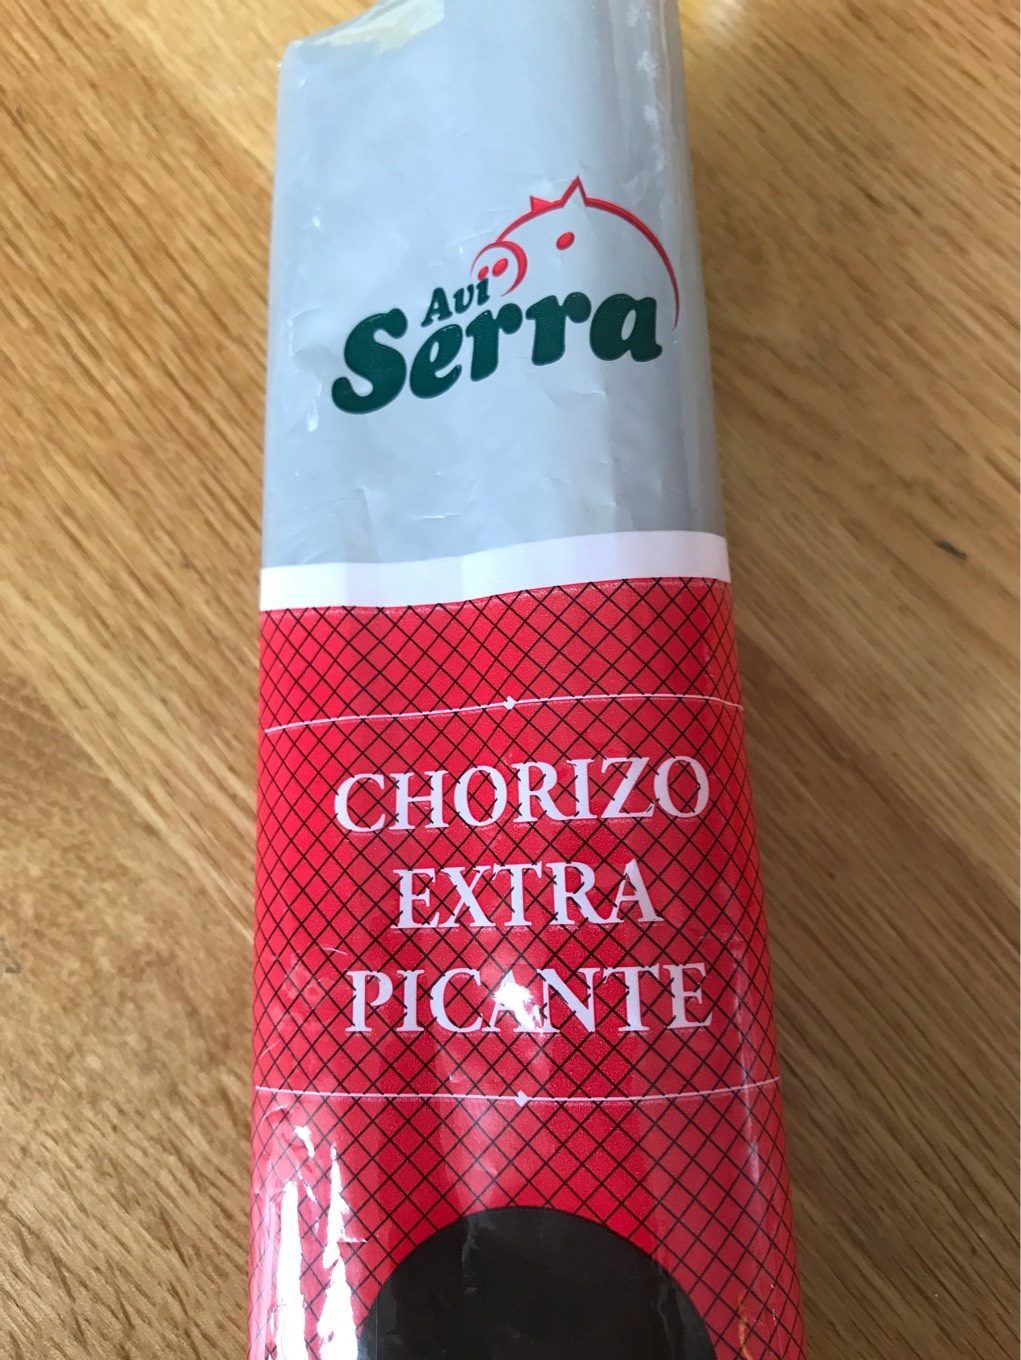 Chorizo extra picante - Product - fr